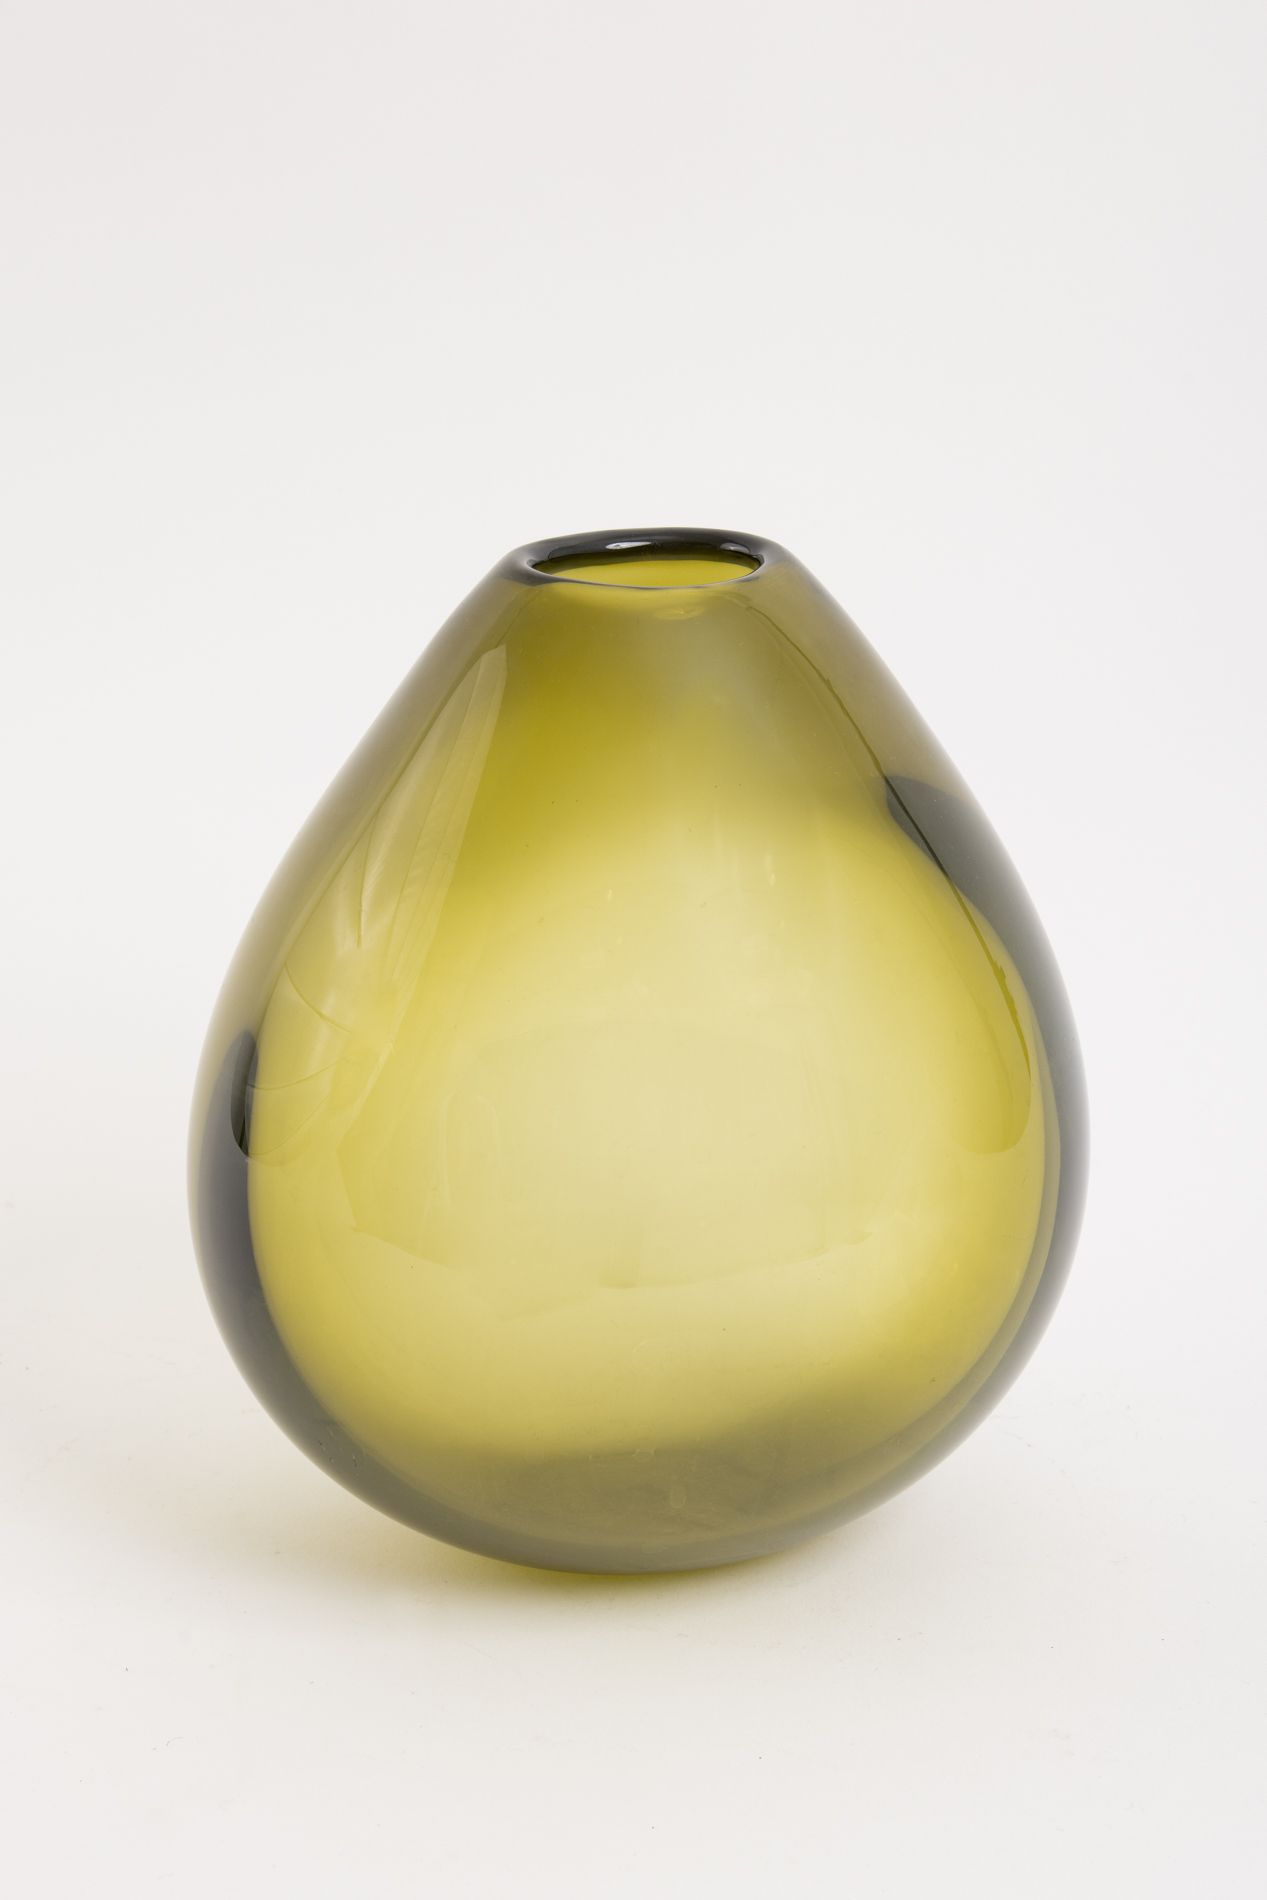 Null Per LUTKEN (1916-1998), HOLMEGAARD Danimarca
Vaso ovoidale in vetro giallo &hellip;